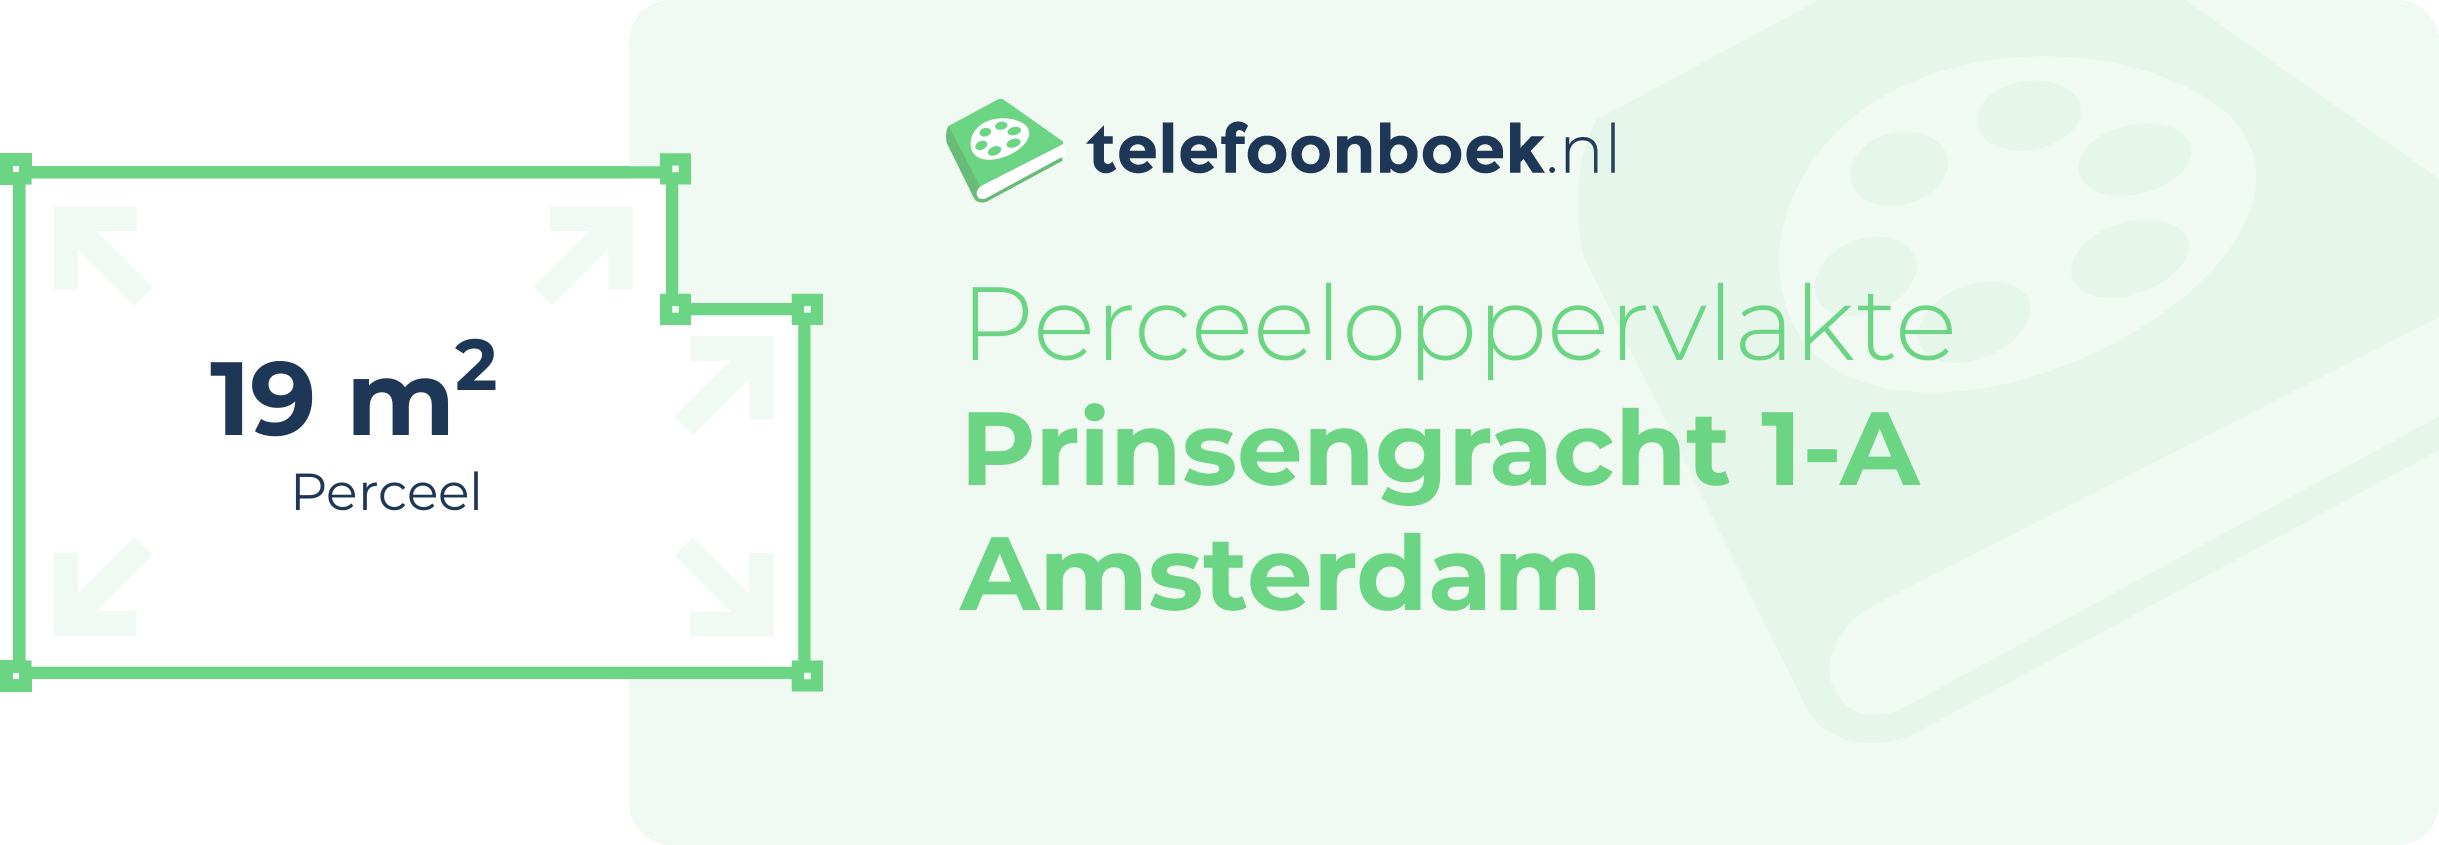 Perceeloppervlakte Prinsengracht 1-A Amsterdam